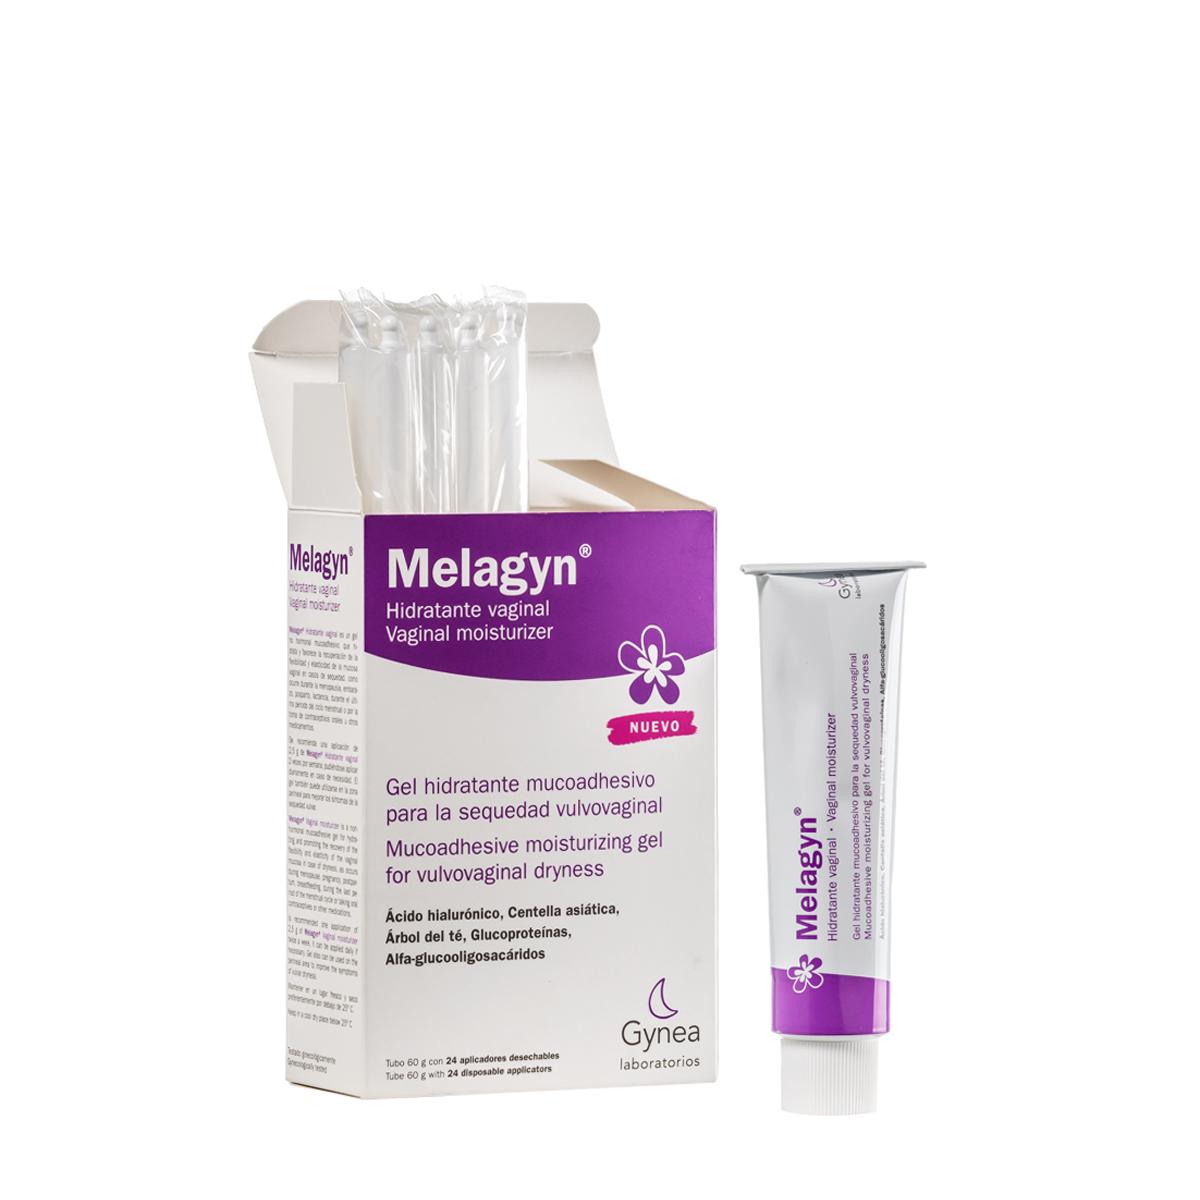 Gynea - Melagyn gel hidratante vaginal 60 gr 21 cánulas desechables